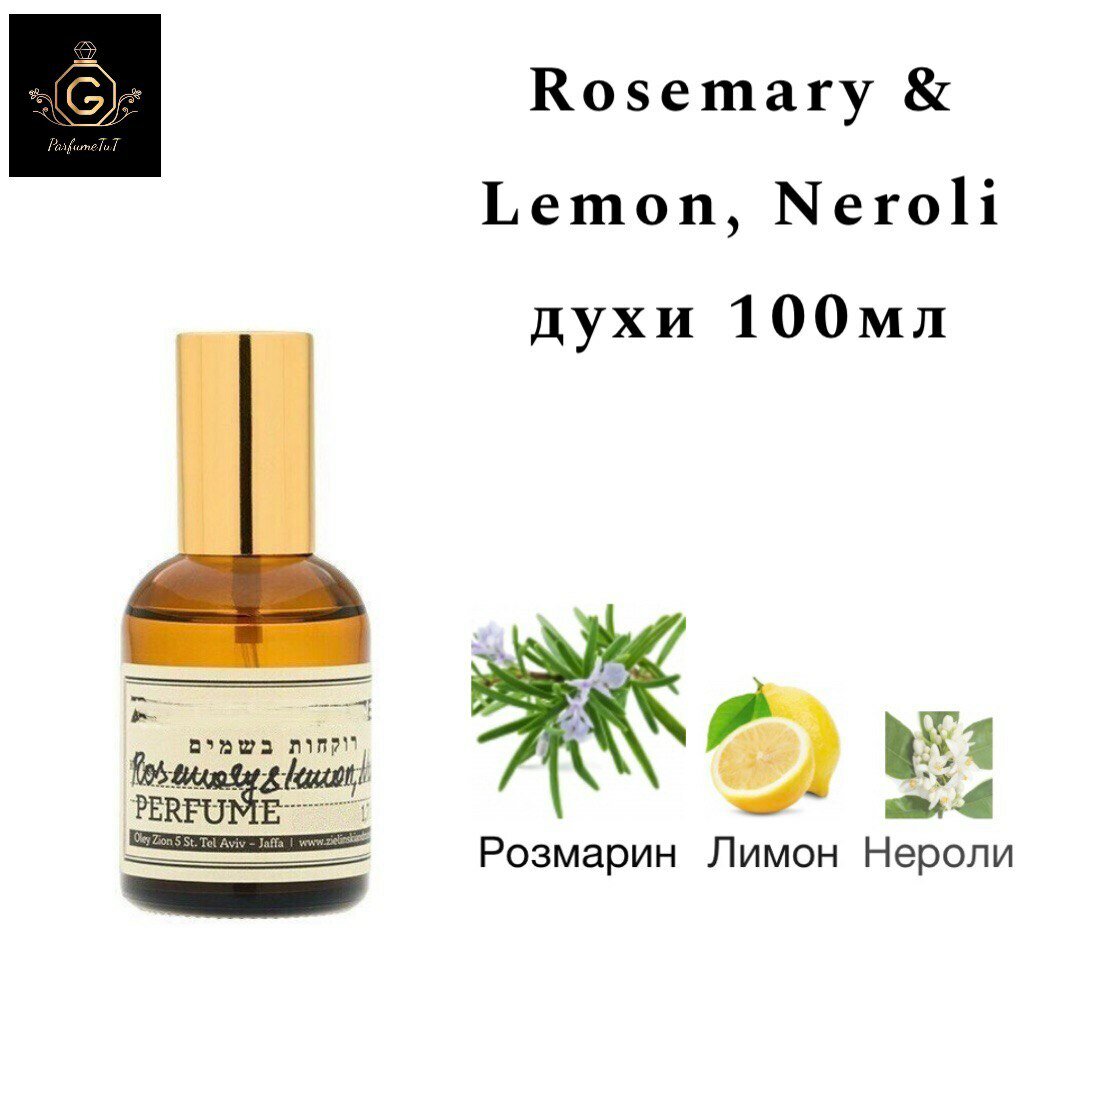 Духи "Rosemary & Lemon, Neroli", 100 ml